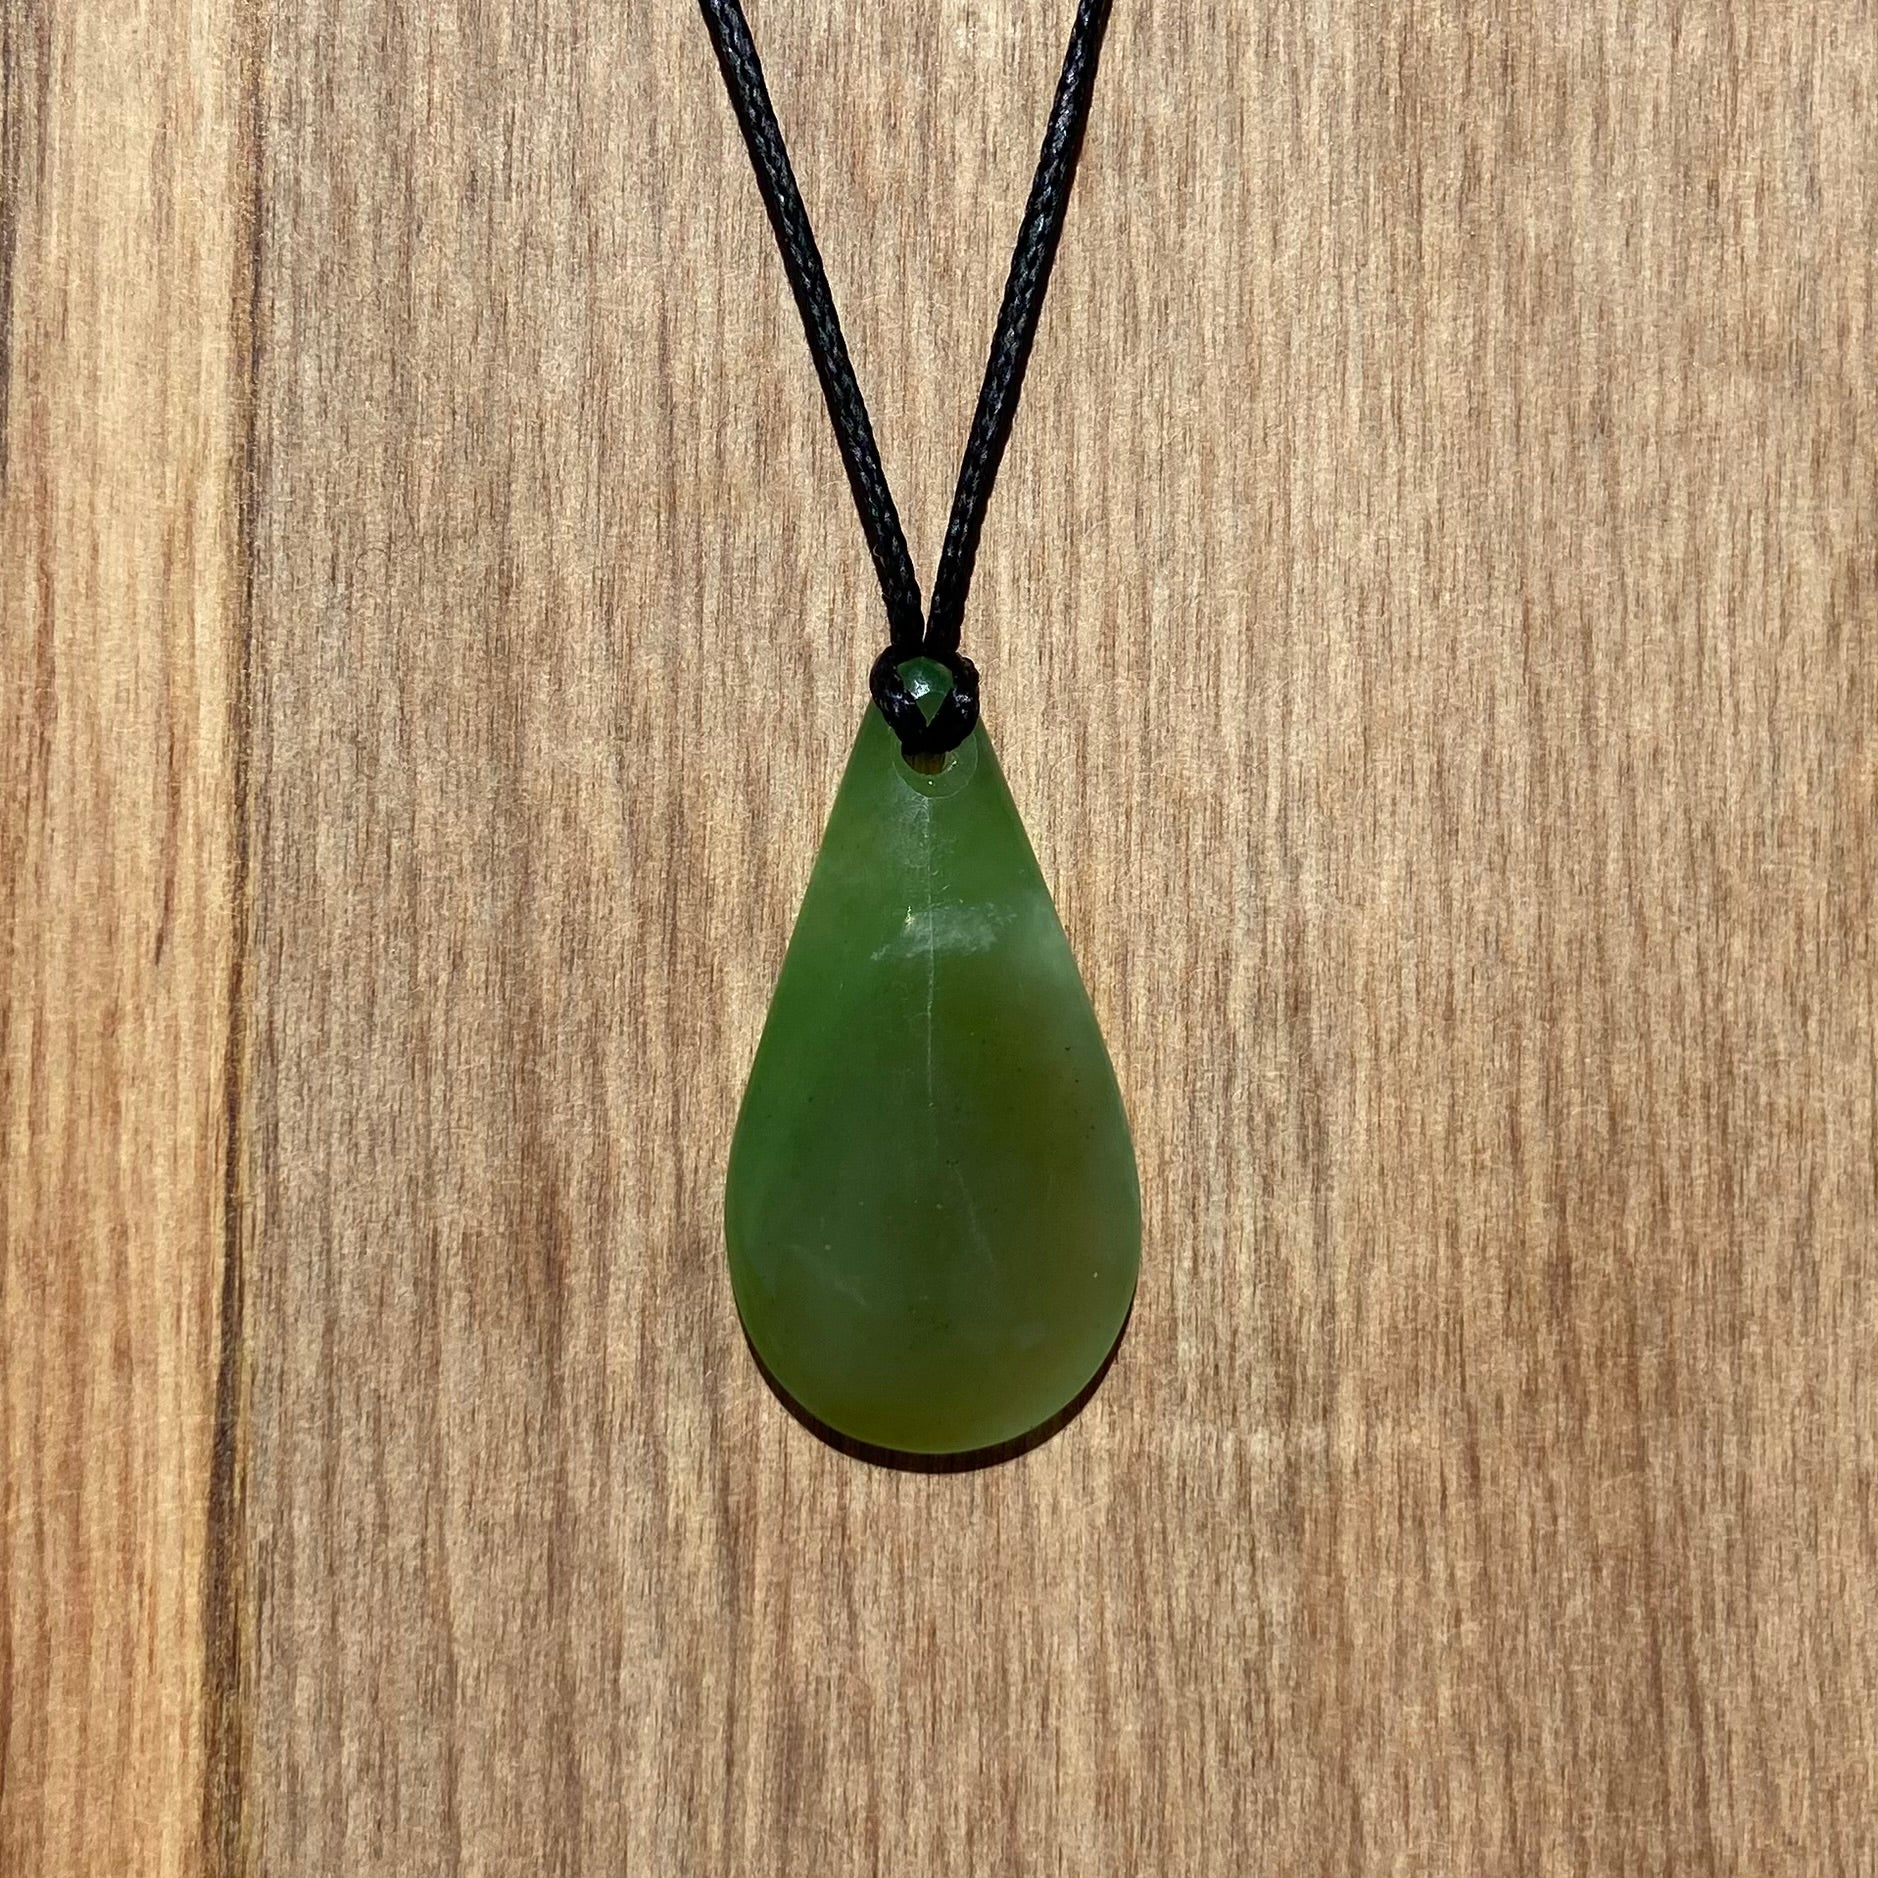 Roimata (drop) pendant hand-carved from New Zealand kahurangi pounamu (greenstone). Front.